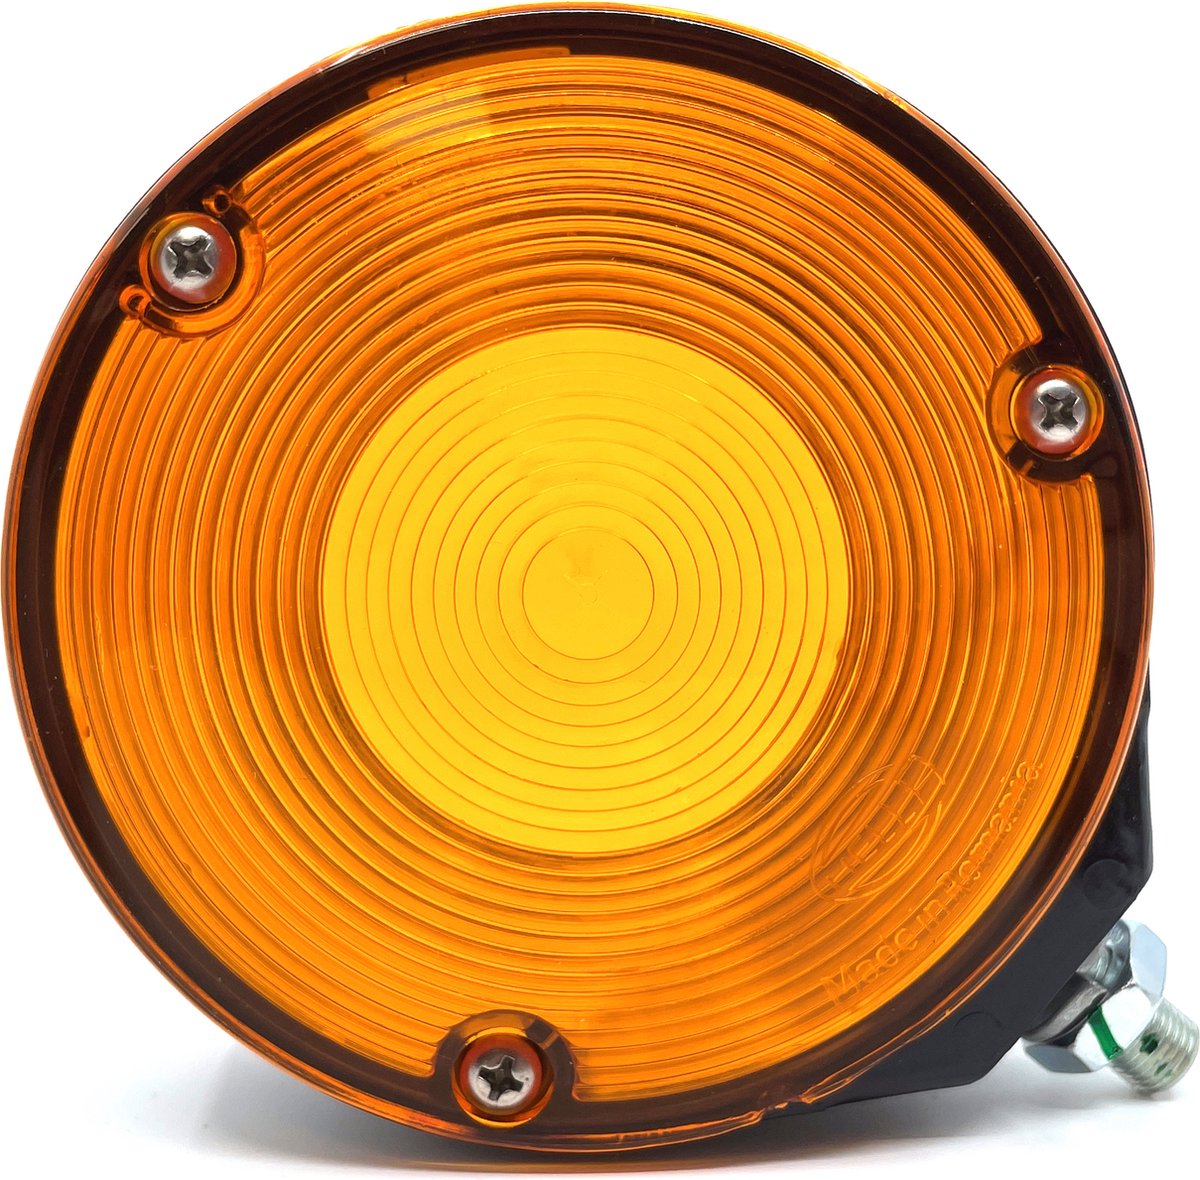 Hella Pablo Knipperlicht - Opbouwlamp - Oranje - BA15S fitting - zonder gloeilamp - zonder kabel